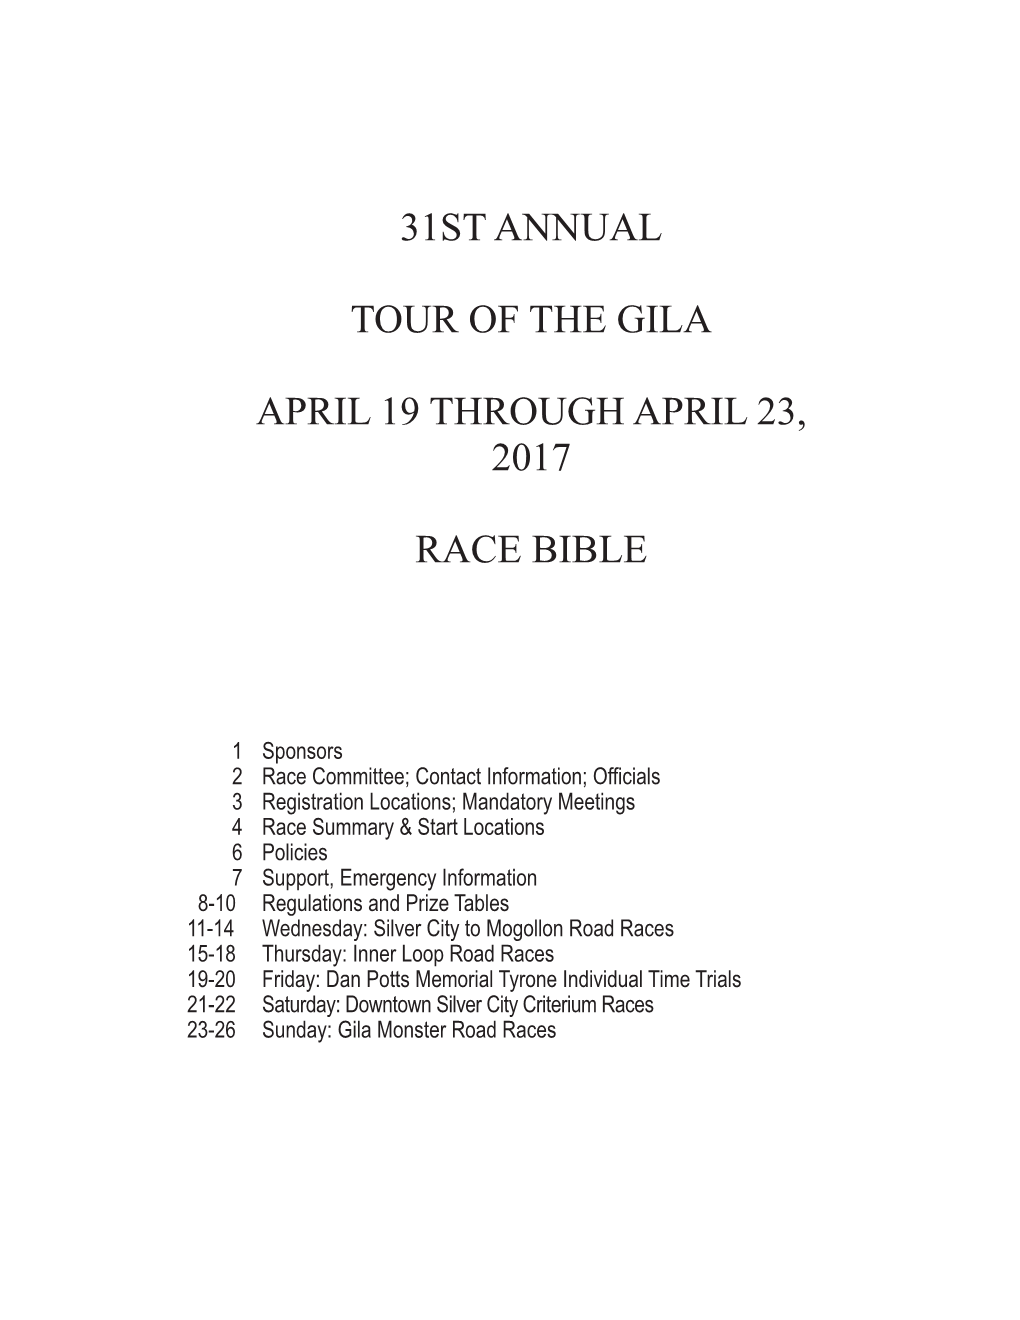 31St Annual Tour of the Gila April 19 Through April 23